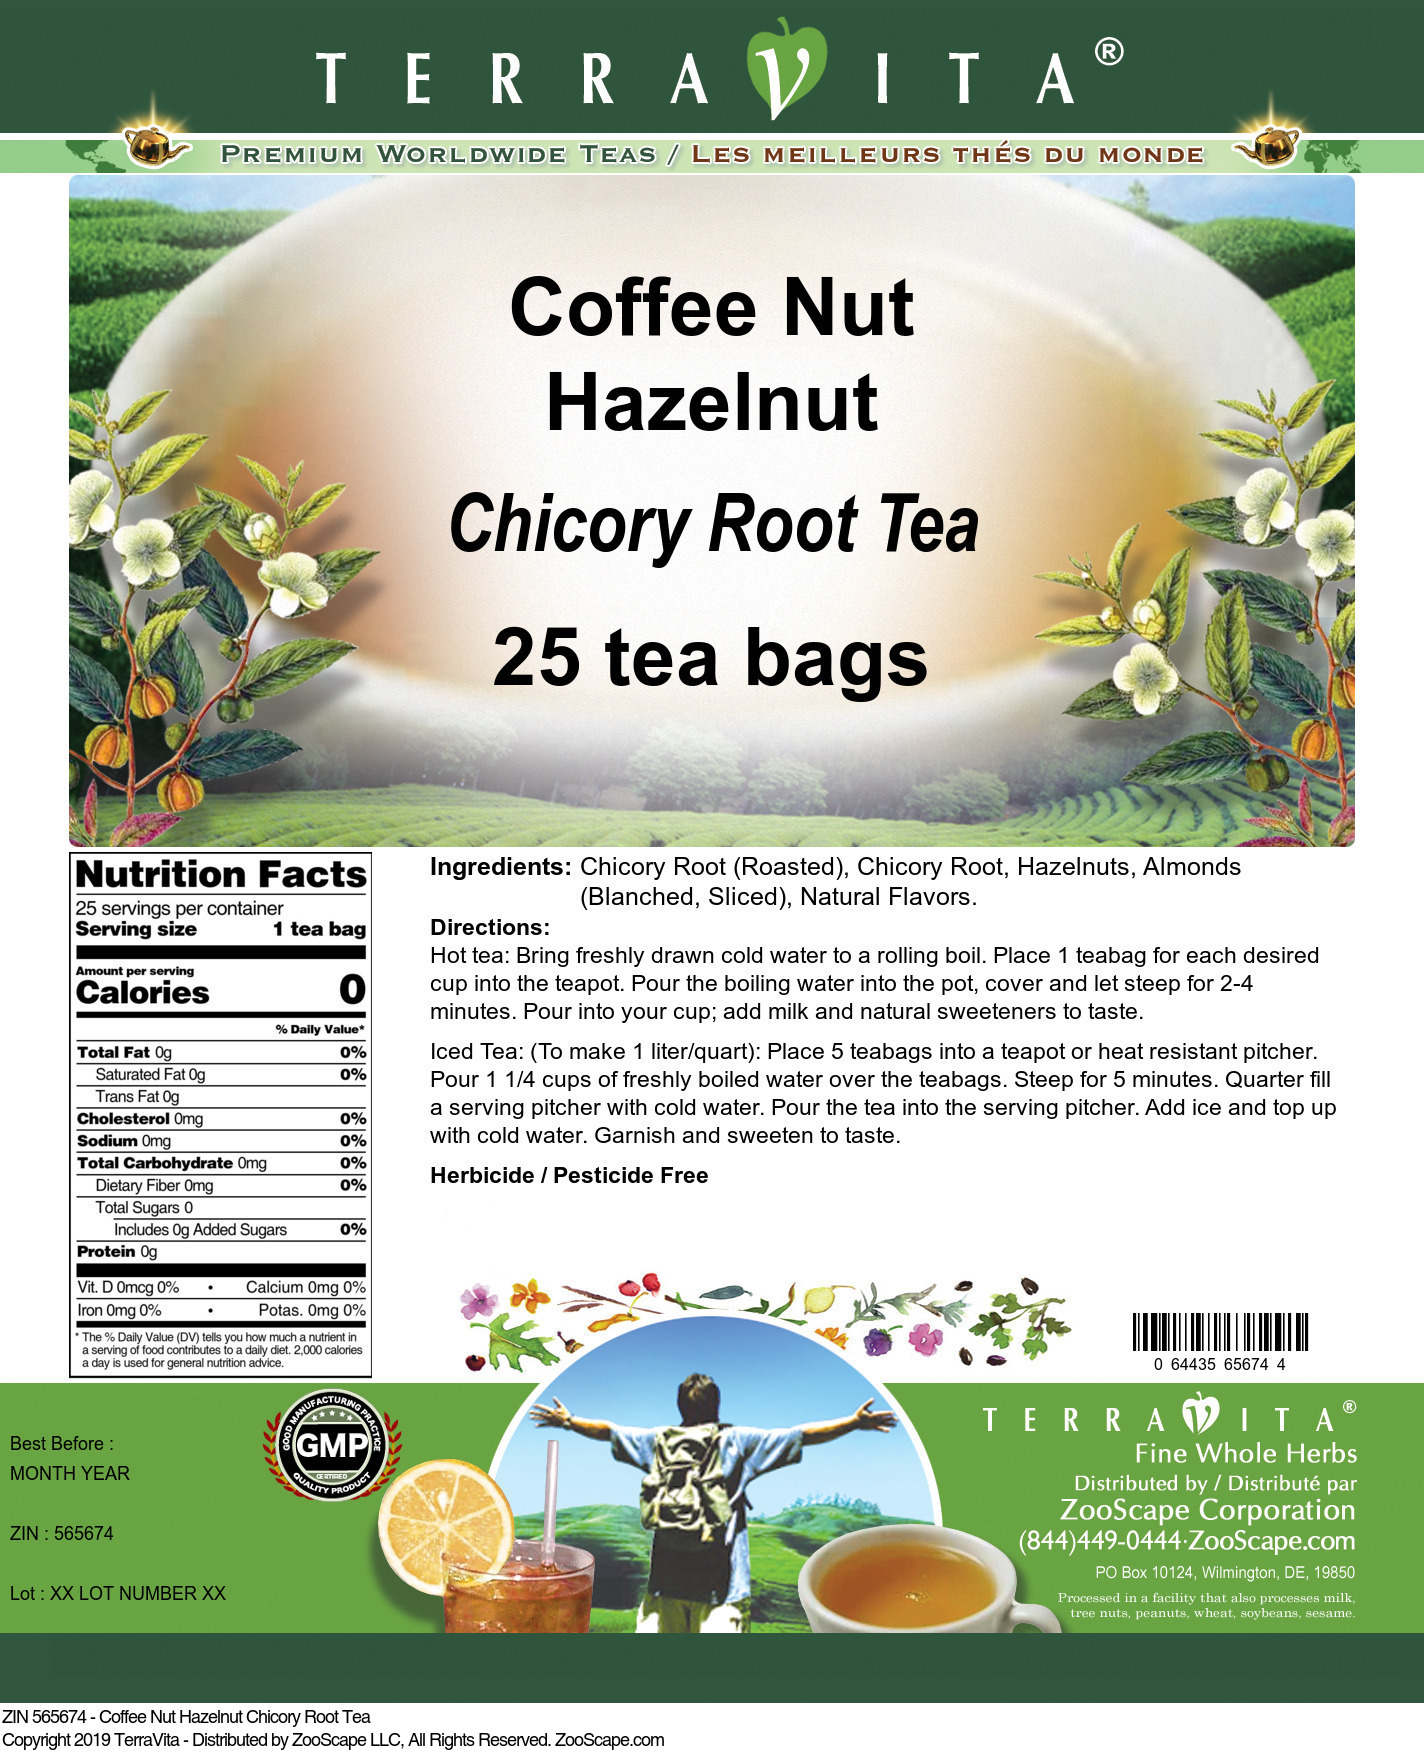 Coffee Nut Hazelnut Chicory Root Tea - Label